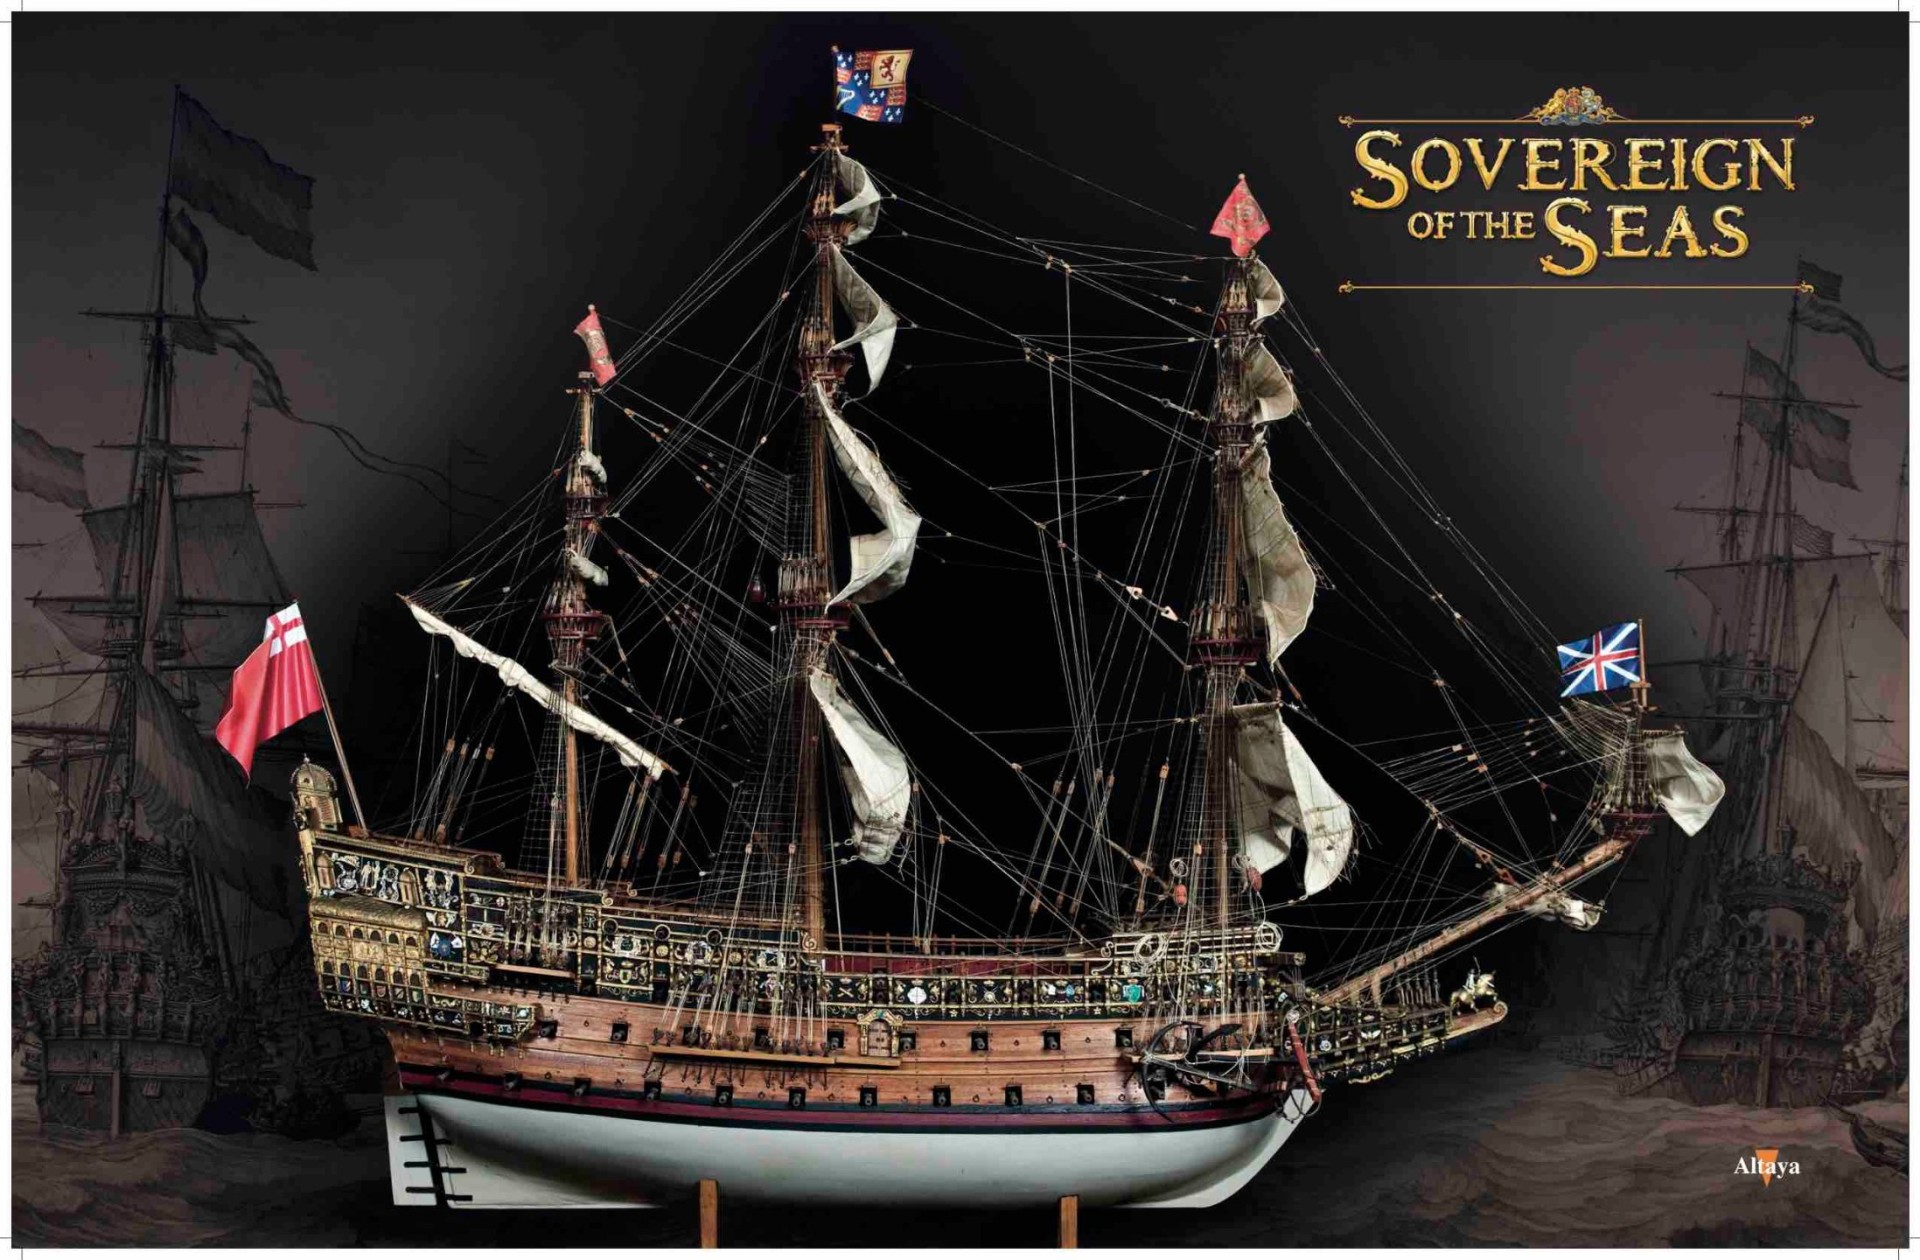 Sovereign of the seas - Altaya.jpg